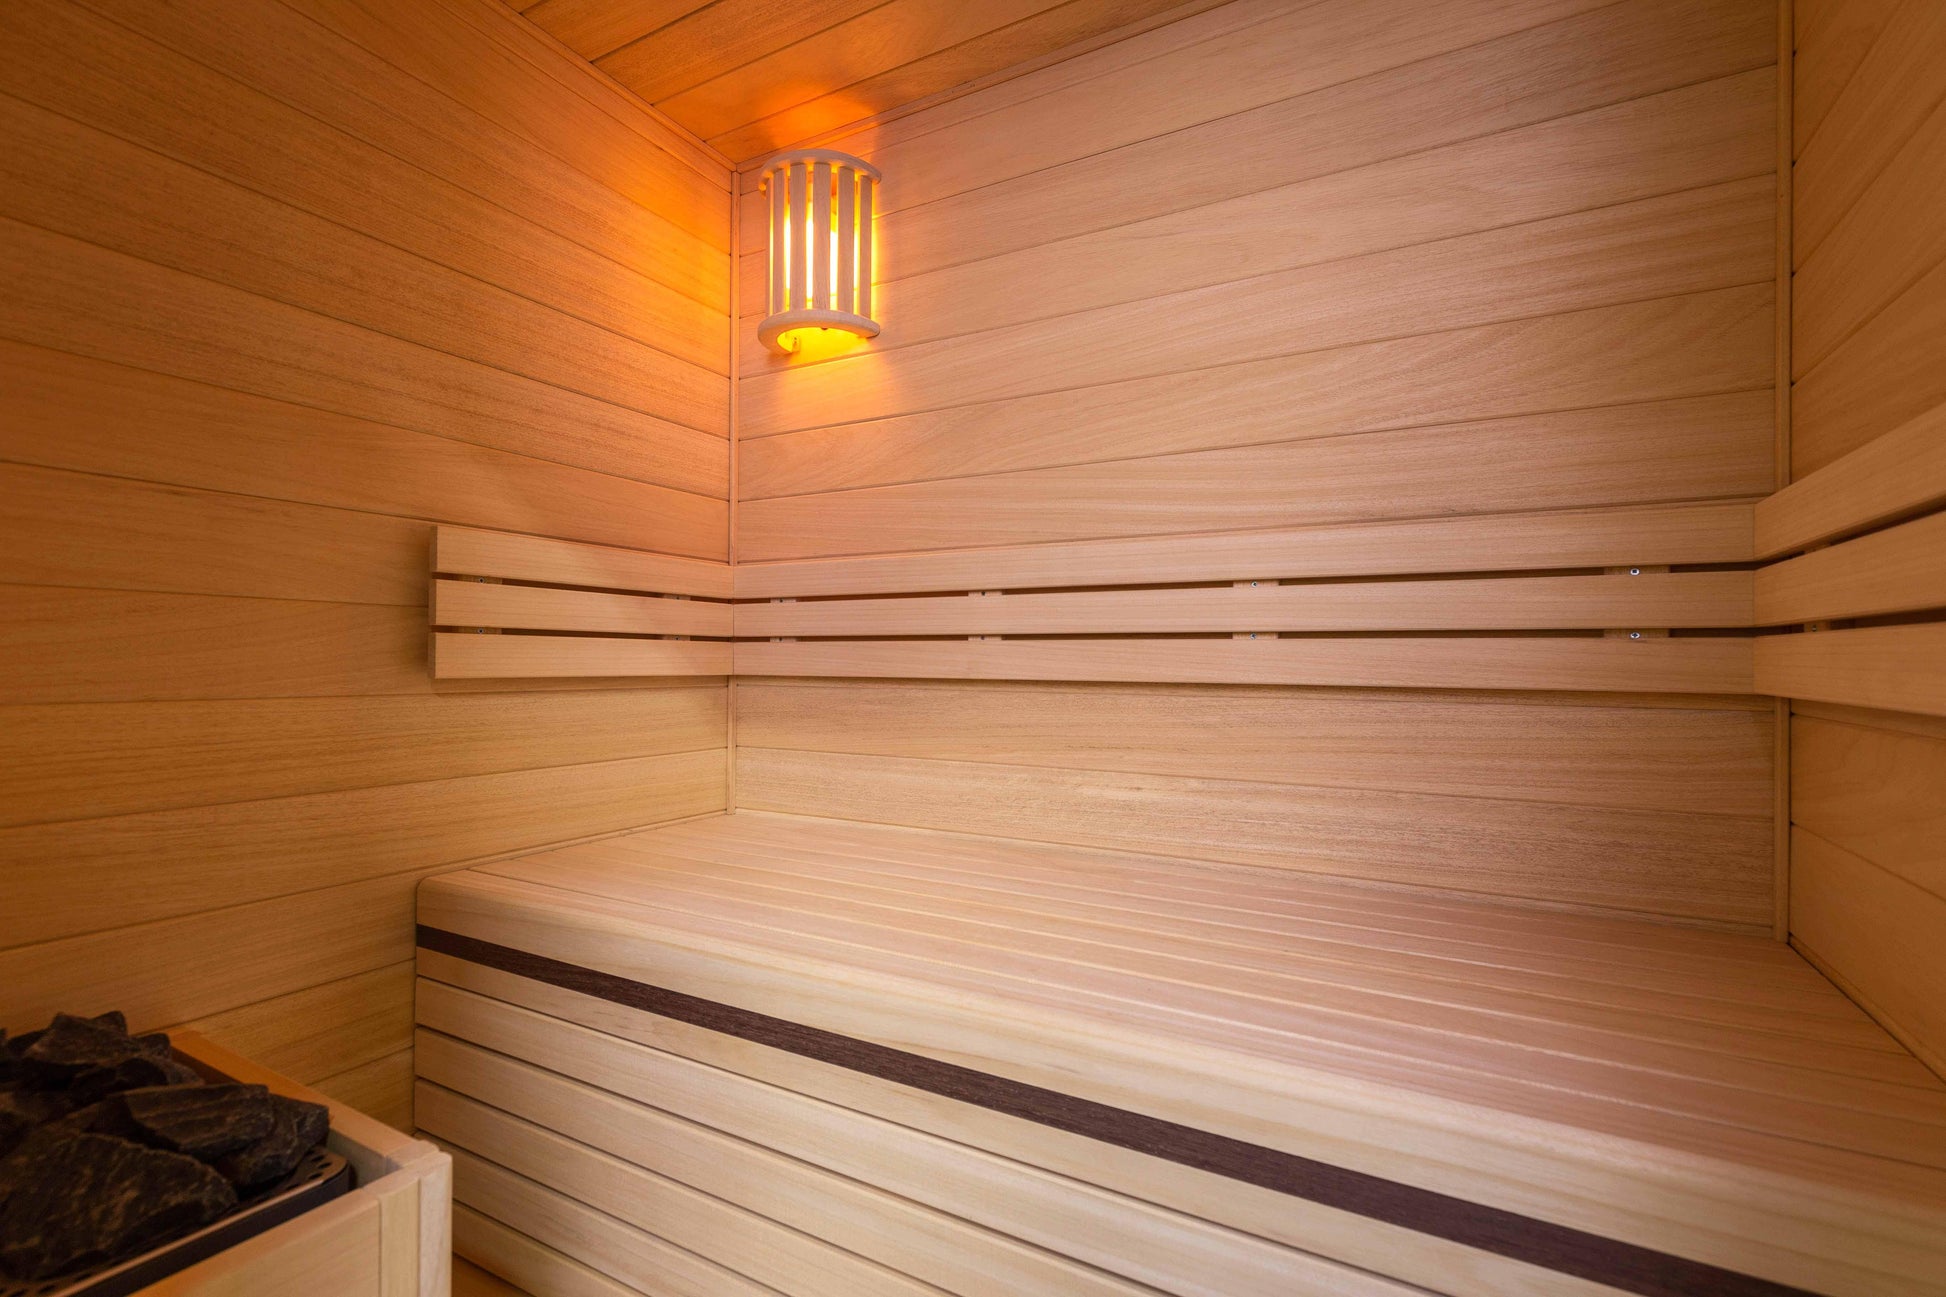 Sauna Well<br> Wenge 200 - spa-suisse.ch